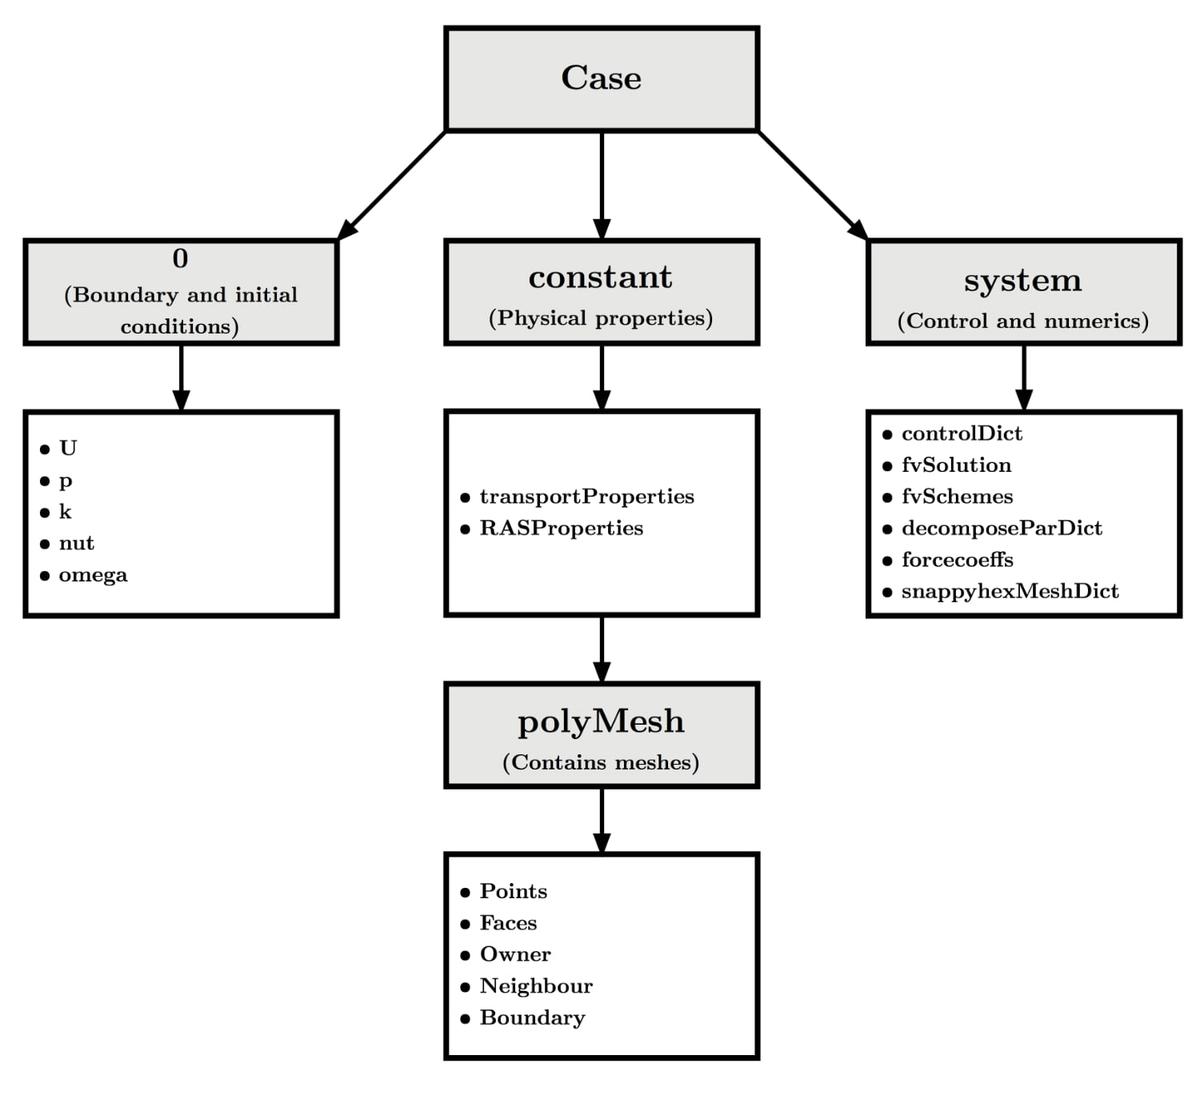 Figure 2.4: Case file structure in OpenFOAM